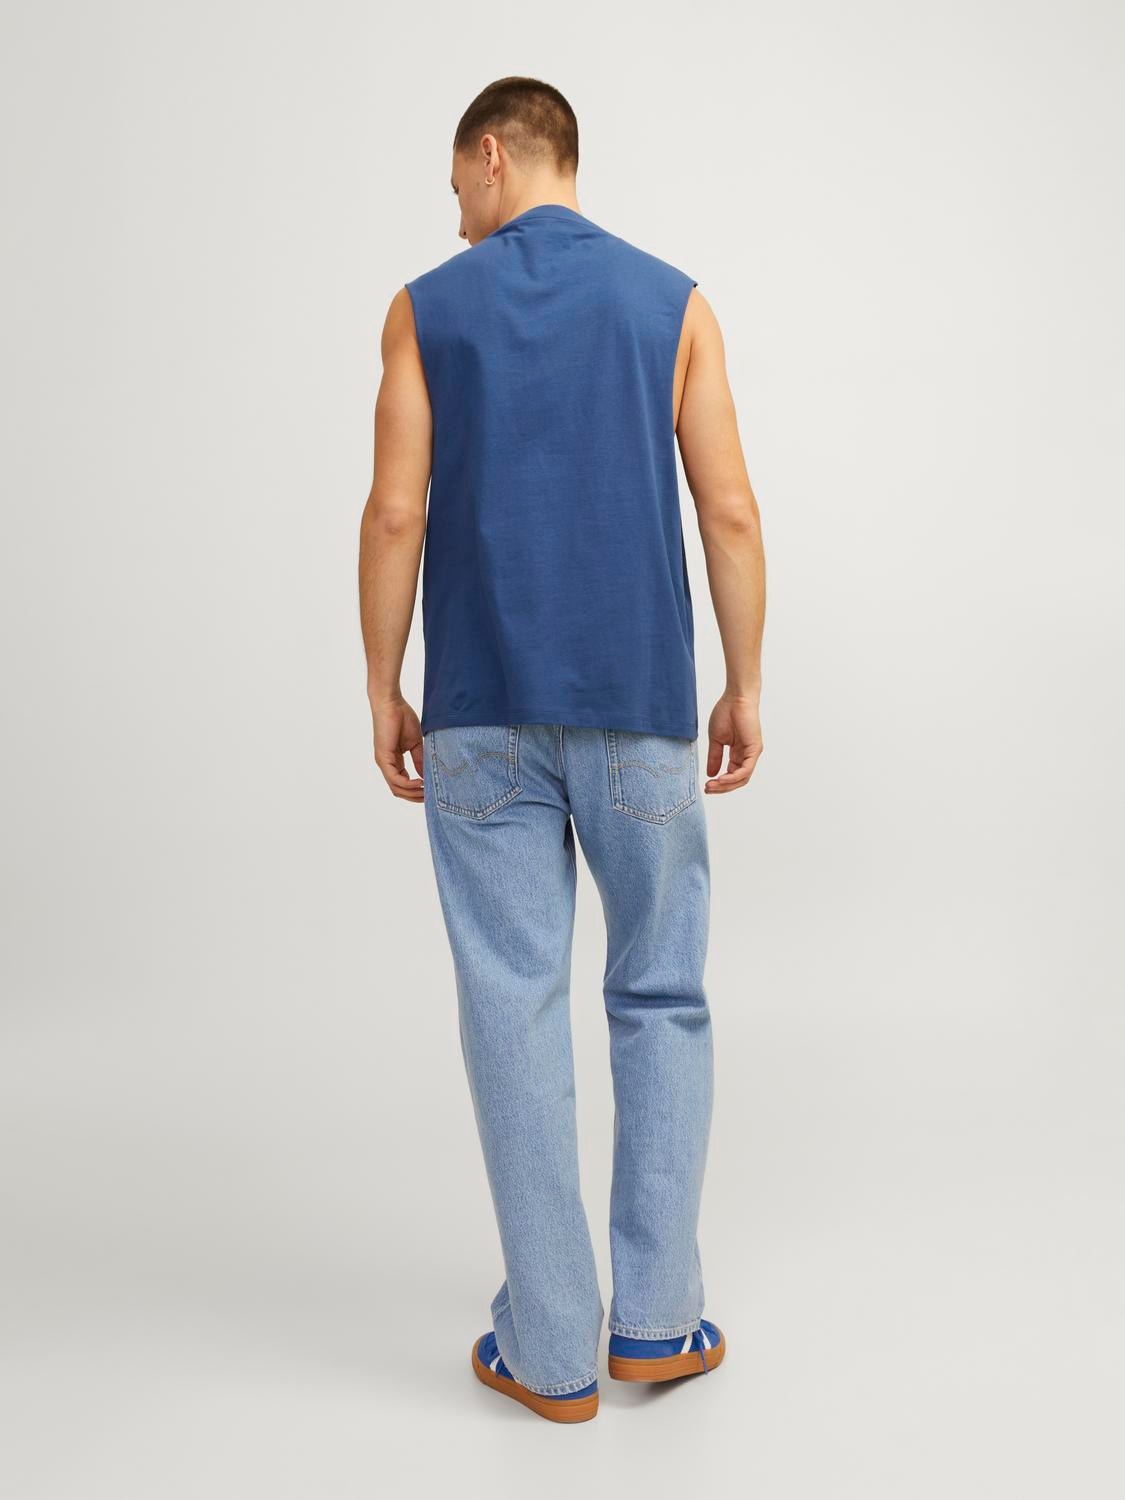 Jack & Jones T-shirt Estampar Decote Redondo -Ensign Blue - 12249131